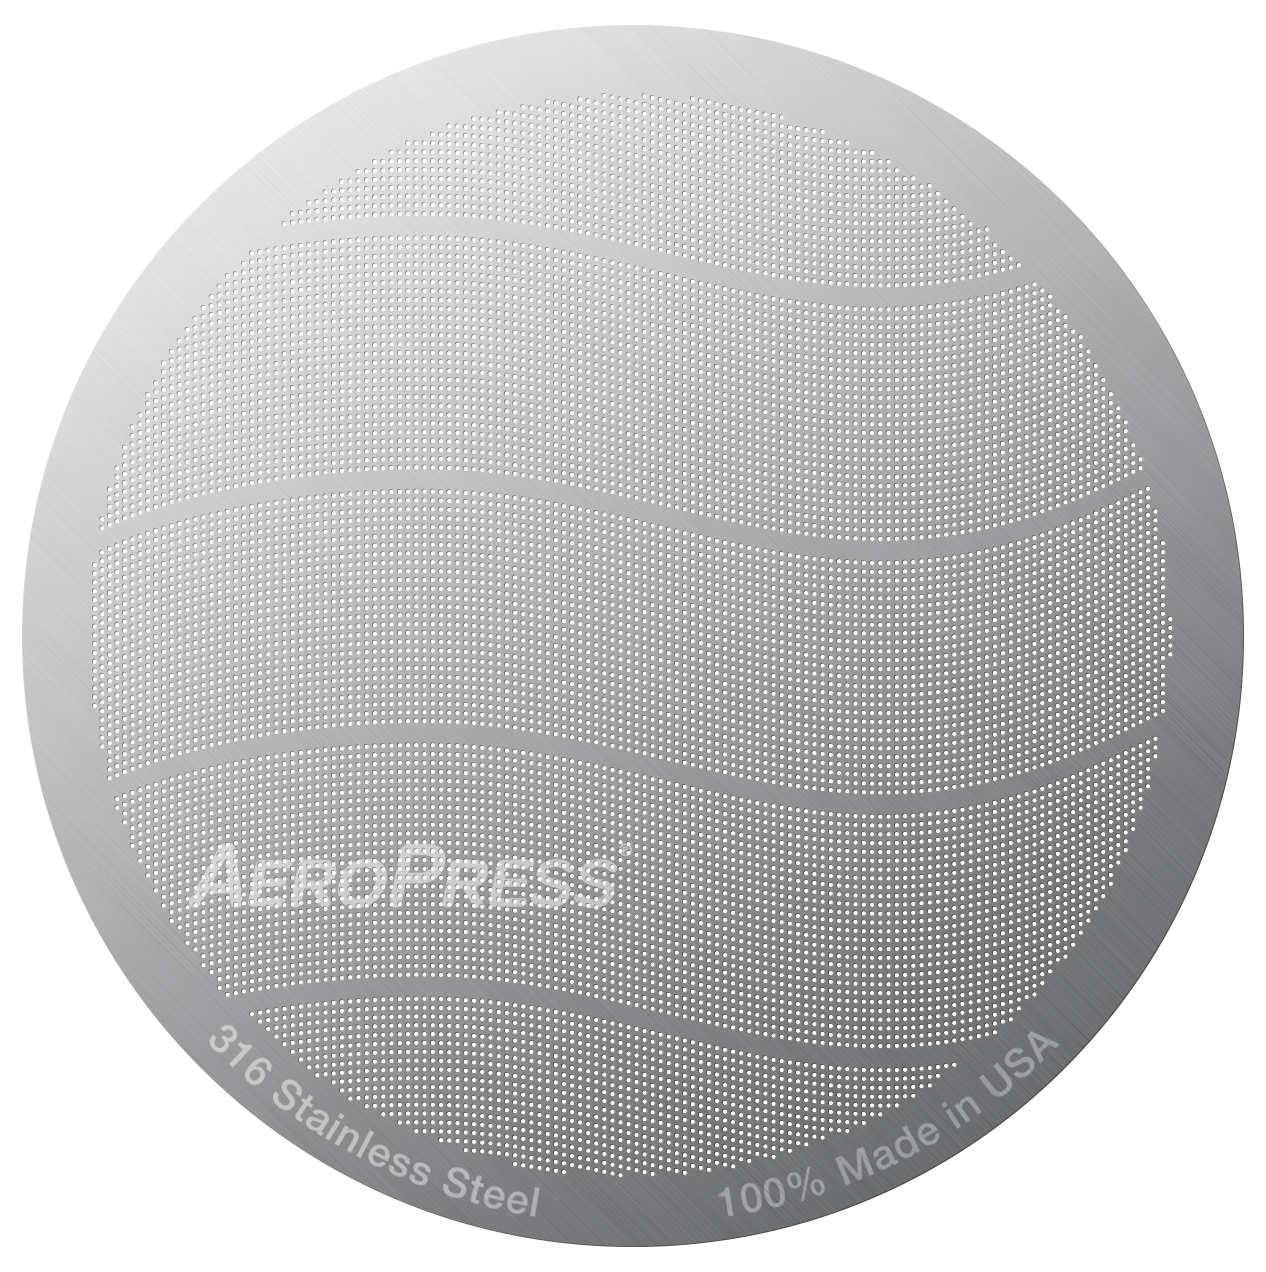 AeroPress ステンレススチール再利用可能フィルター